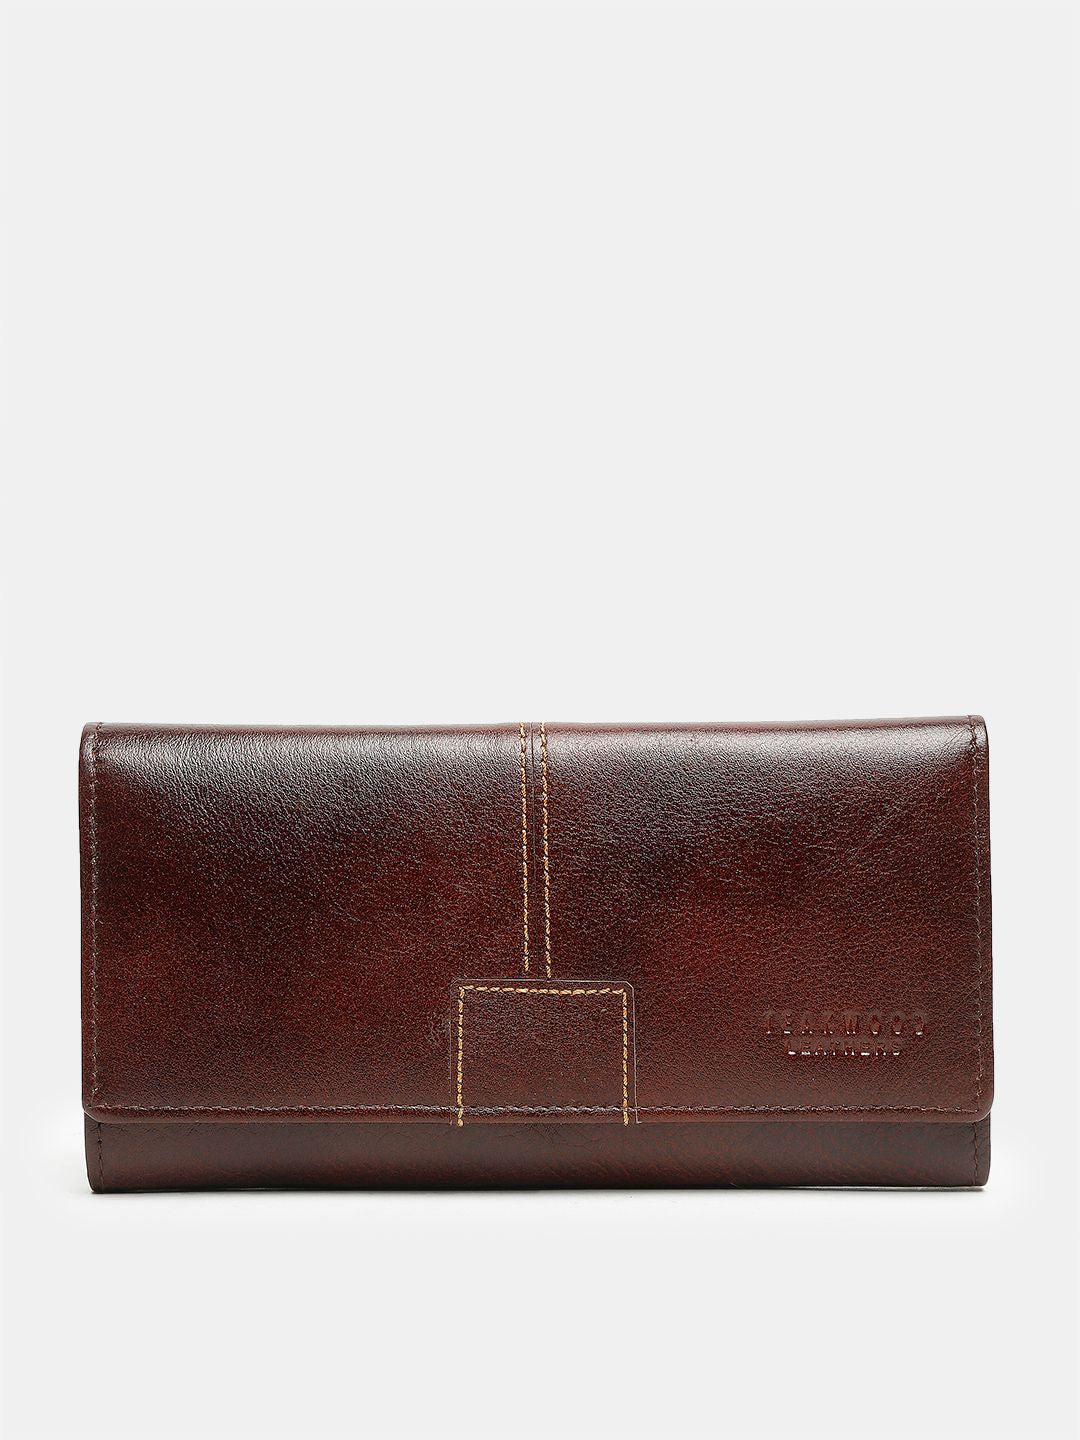 Buy Woodland. Leather 3 Folder Formal Regular Wallet (Brown) at Amazon.in